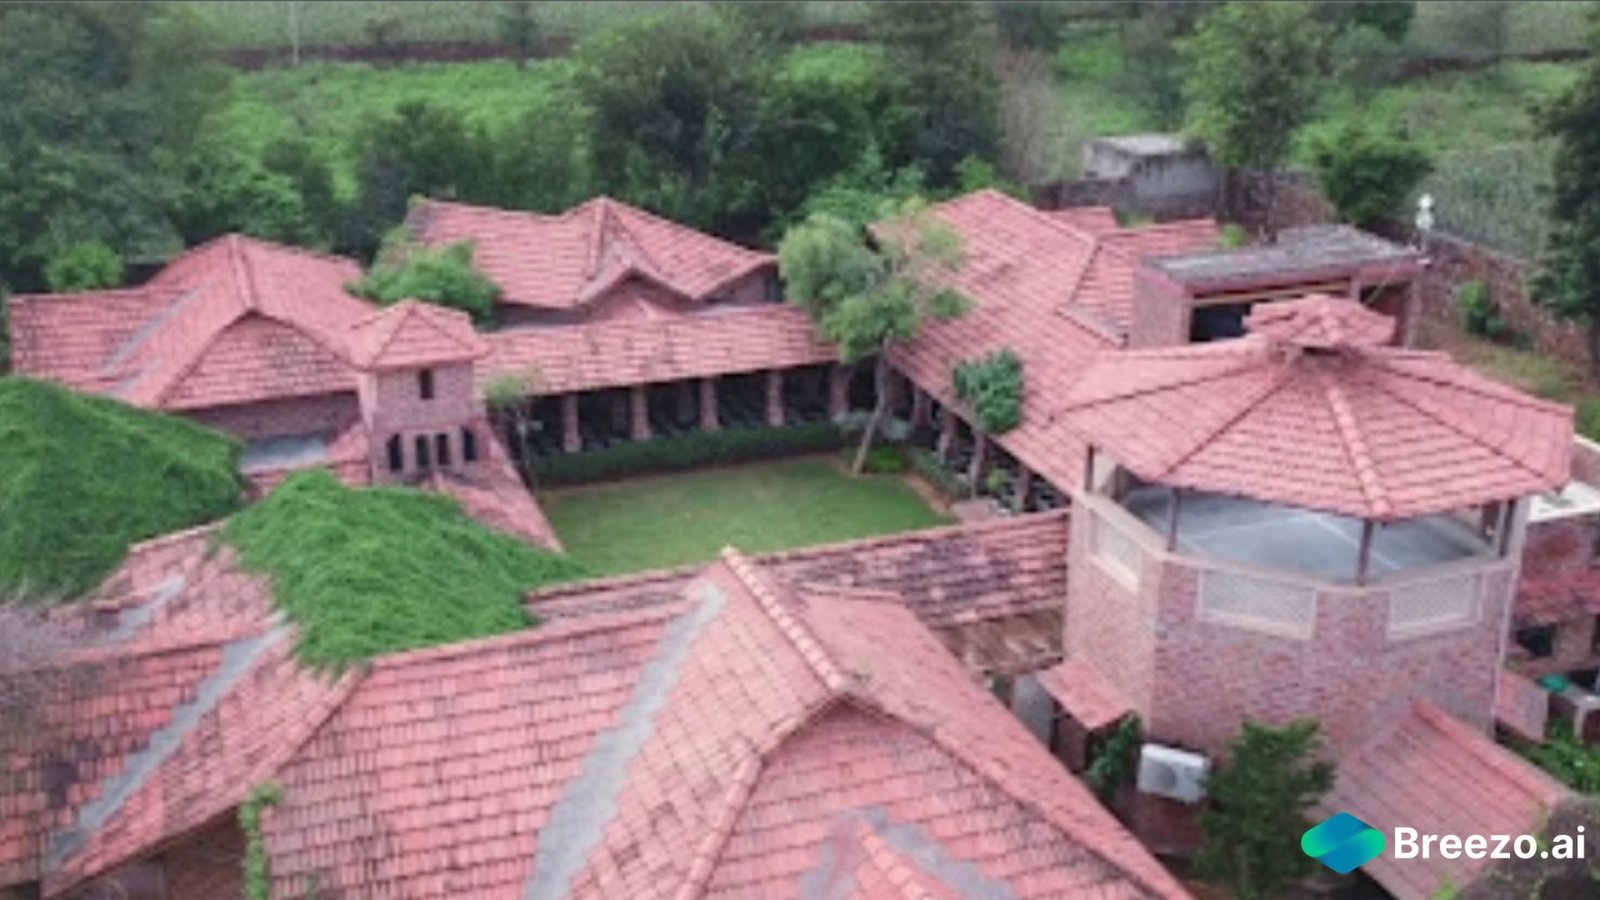 Farmhouse for film shoots in Delhi NCR, Gurgaon, and Noida - rustic charm and modern elegance.